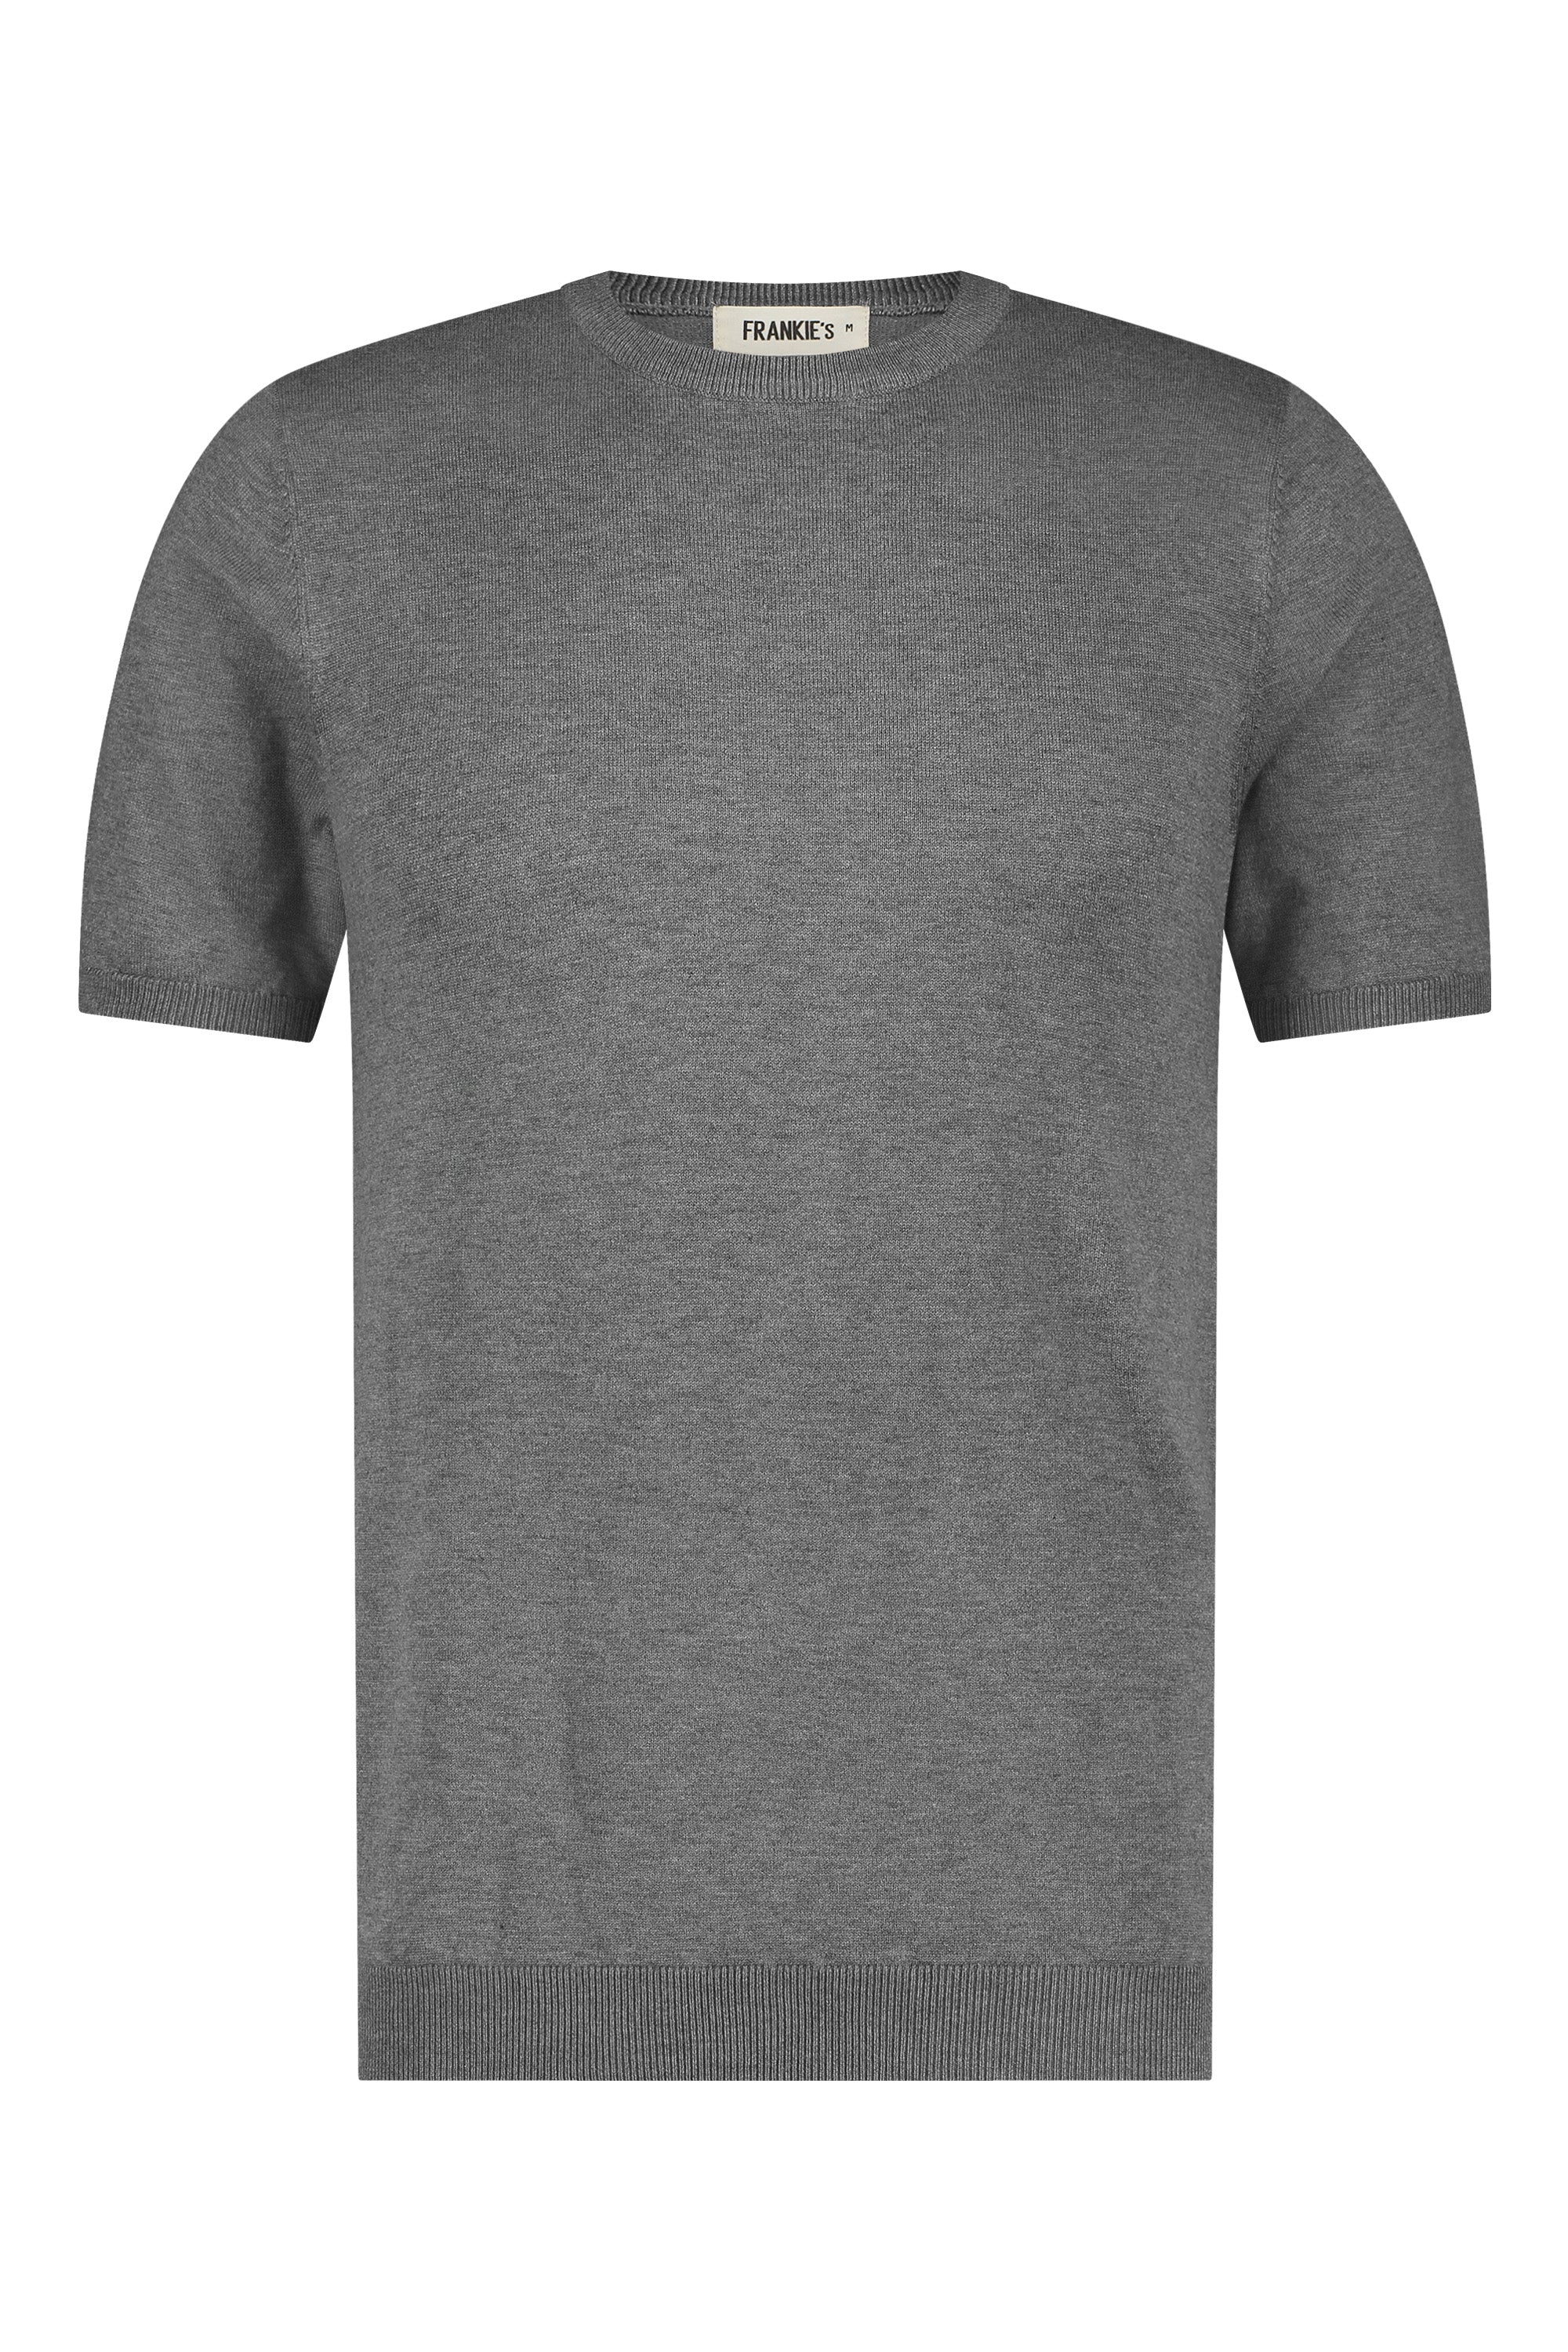 T-shirt knitwear short sleeve grey